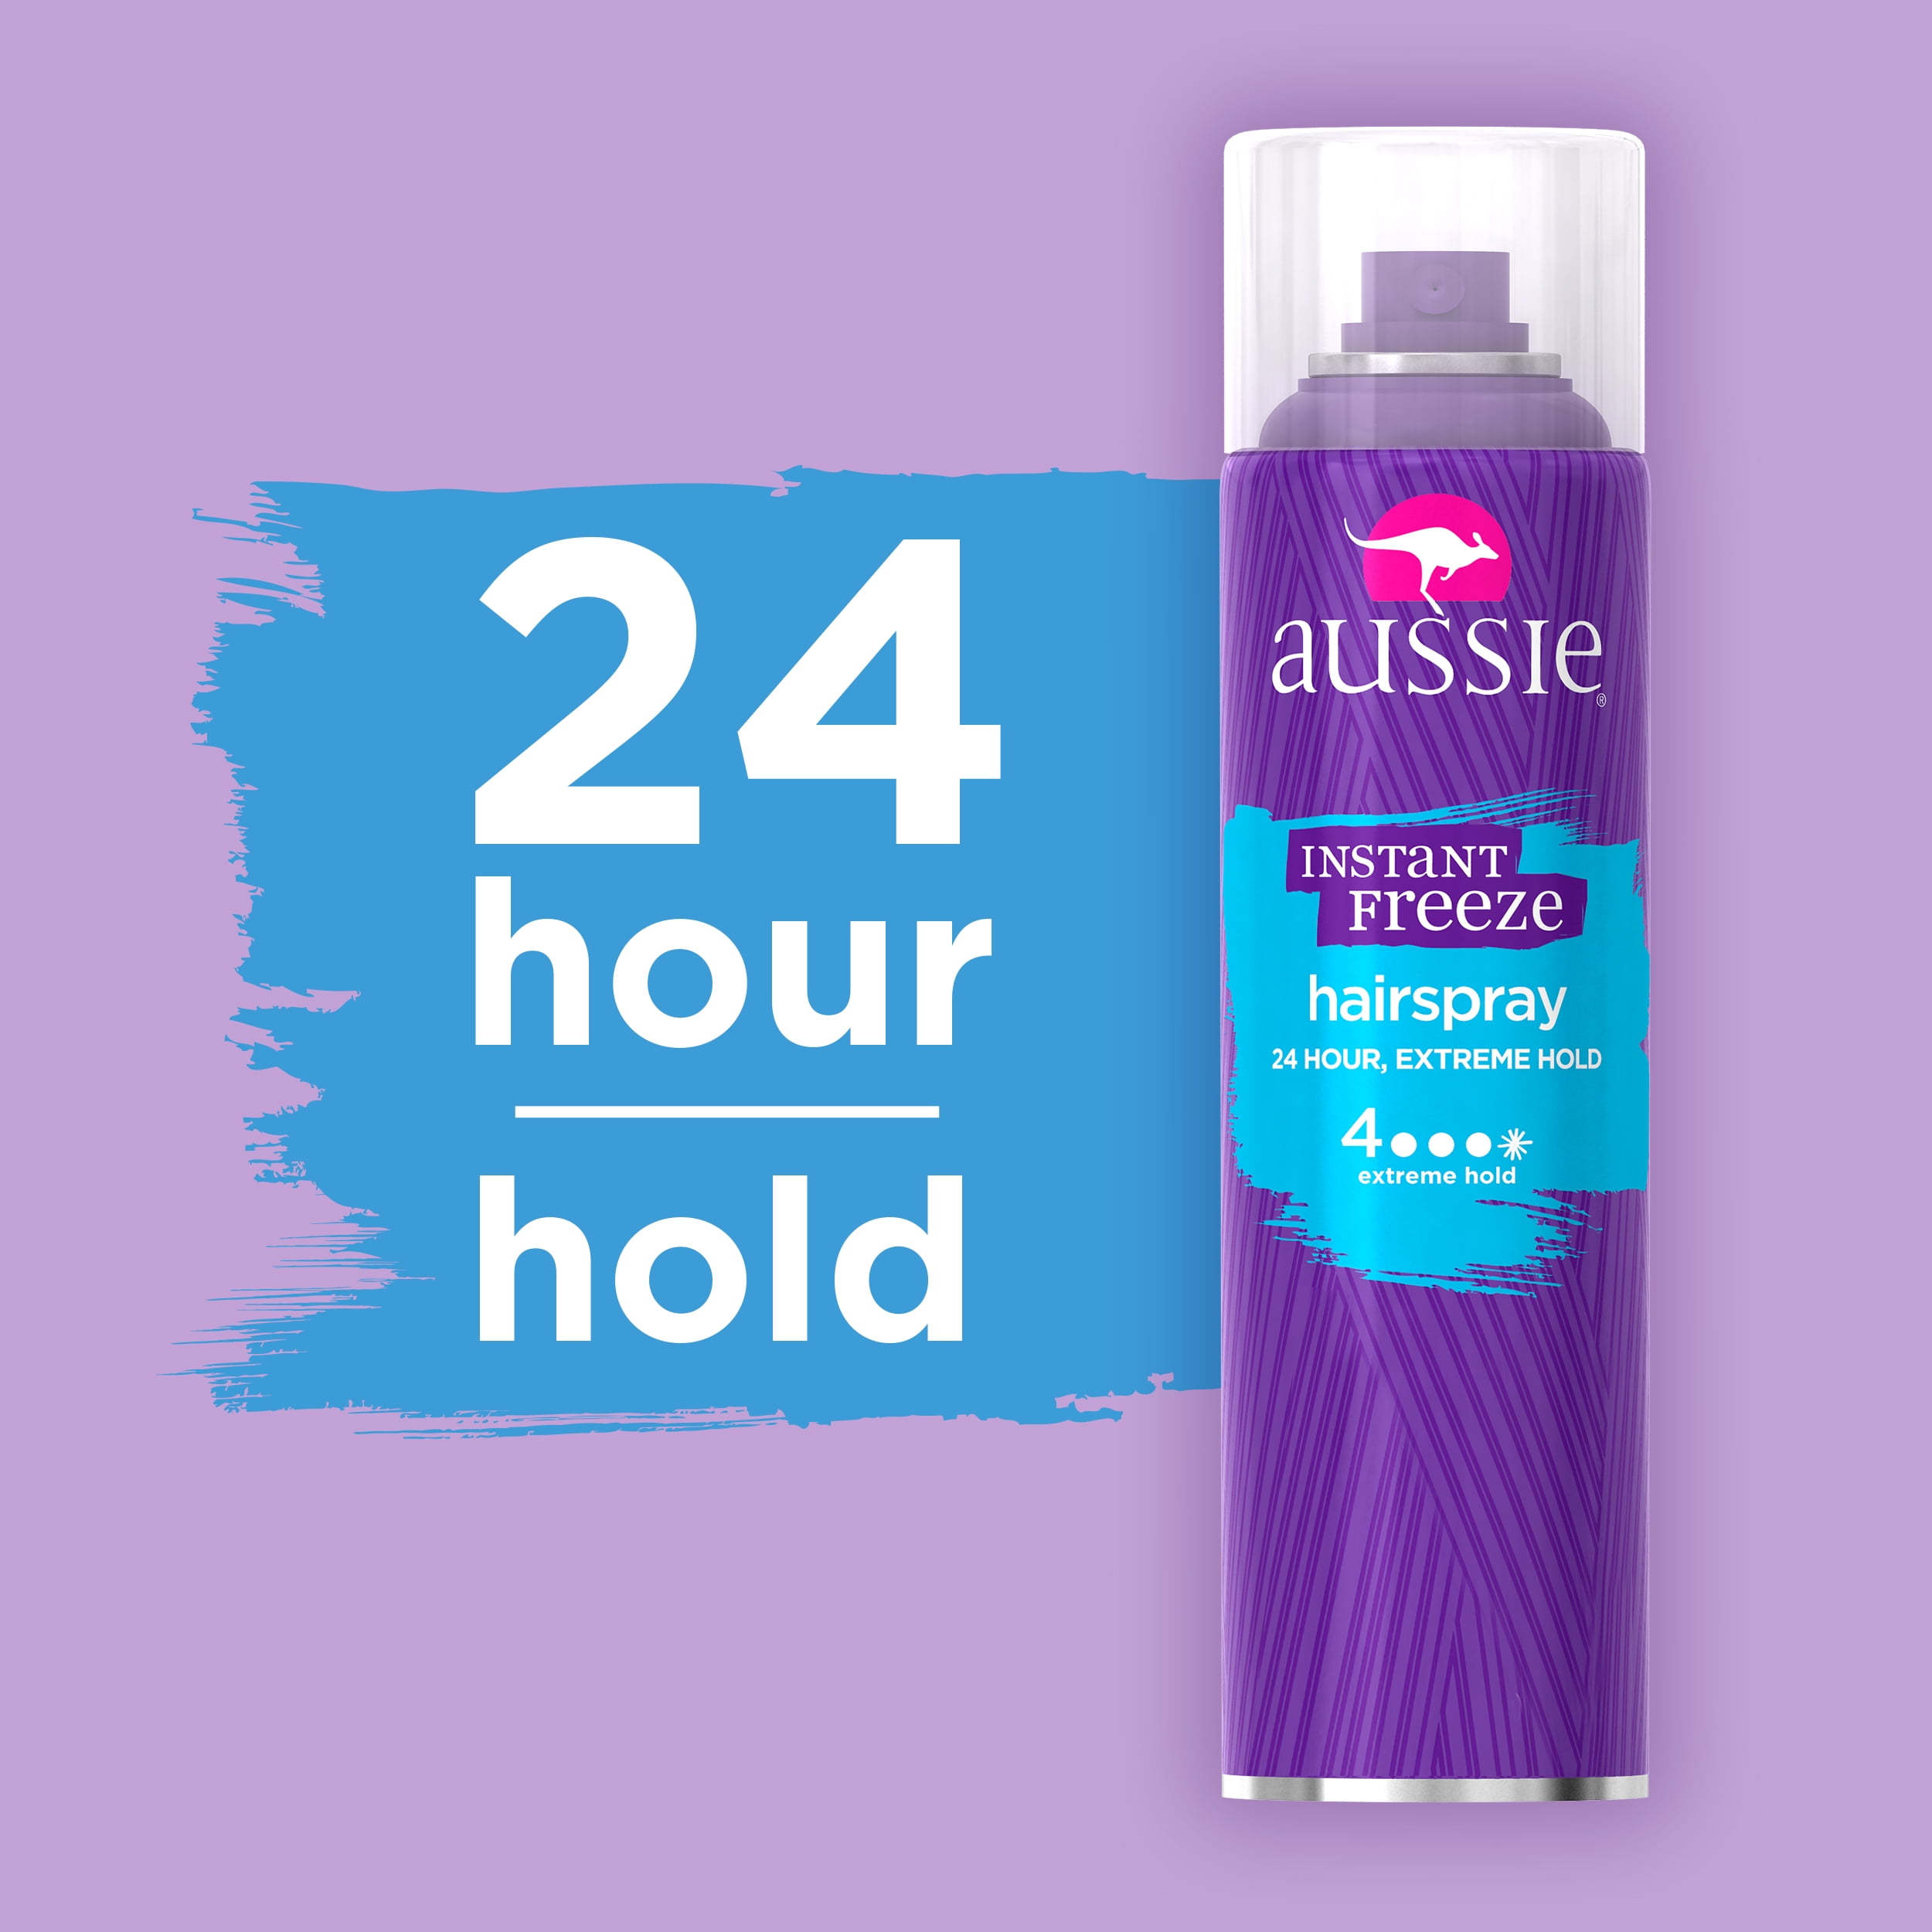 Aussie Instant Freeze Hairspray, 7 oz - Mariano's